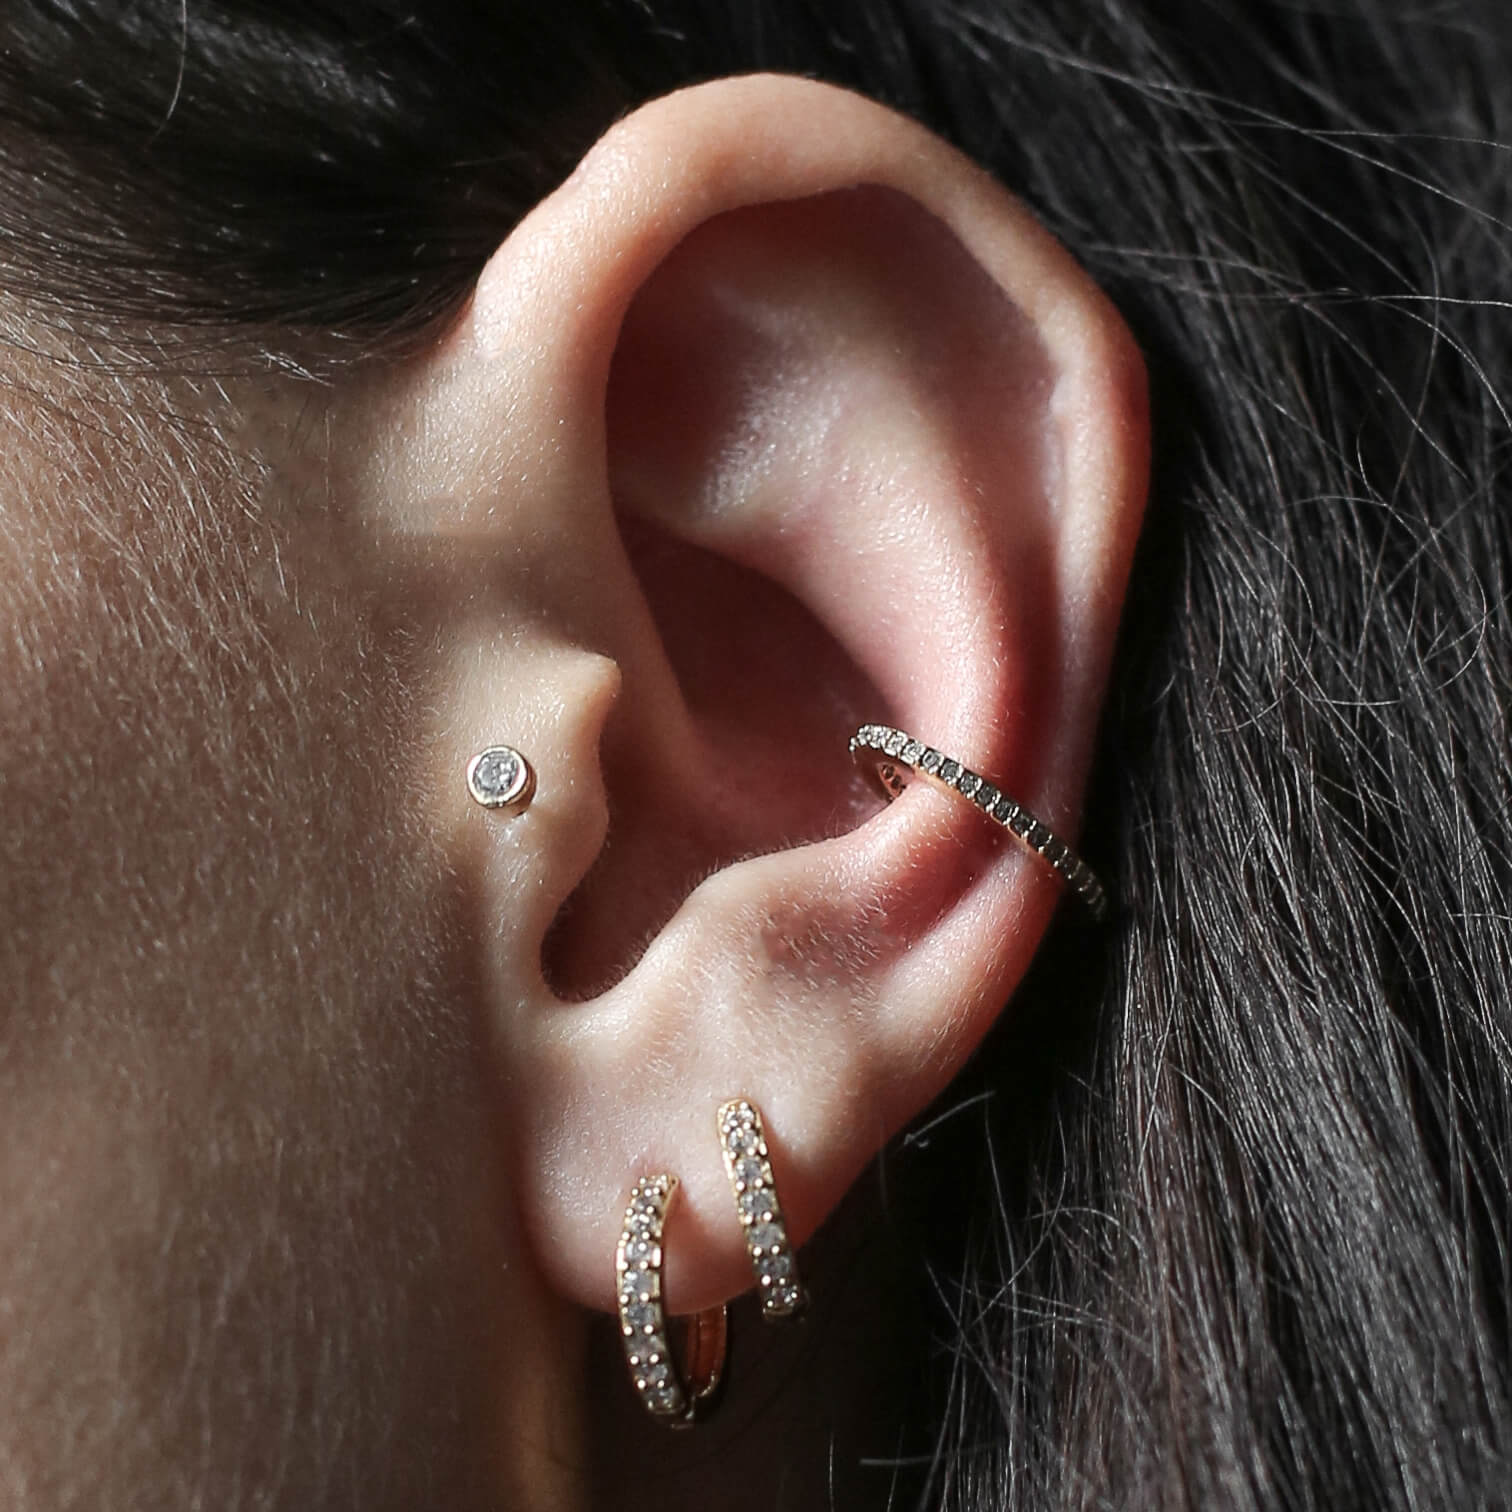 Flat piercing | Earings piercings, Cool ear piercings, Ear piercing studs